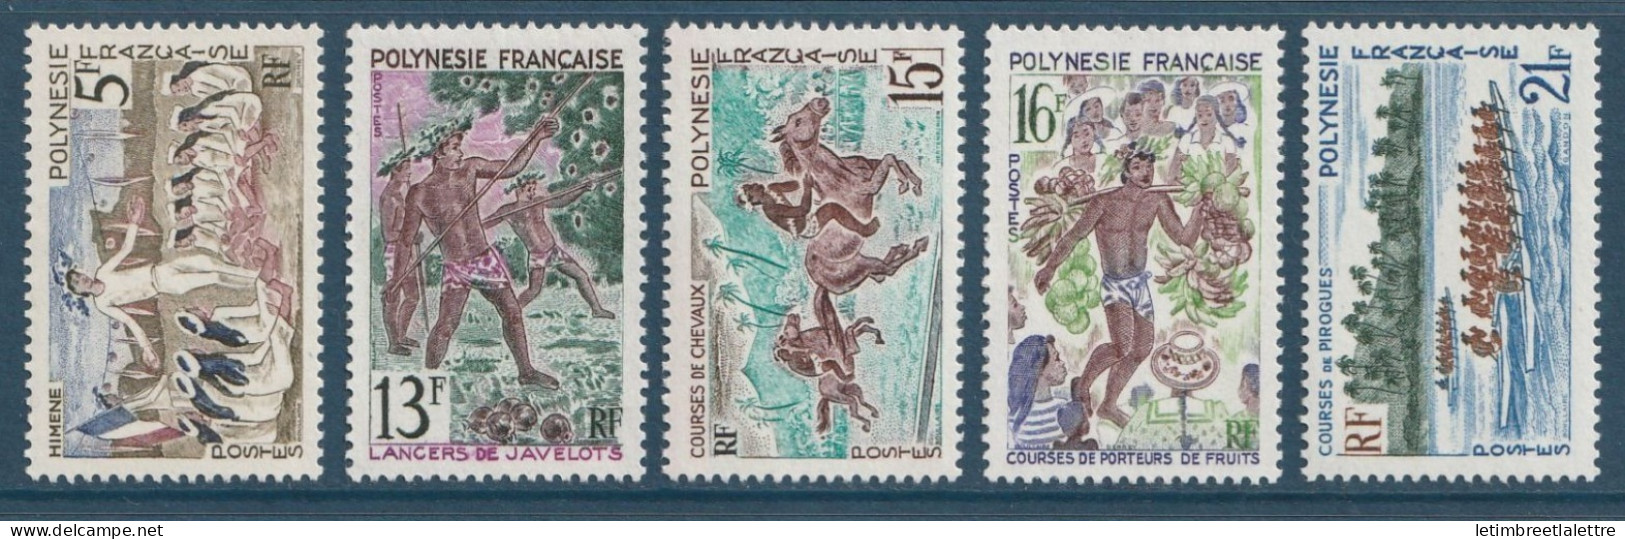 Polynésie - YT N° 47 à 51 ** - Neuf Sans Charnière - 1967 - Unused Stamps